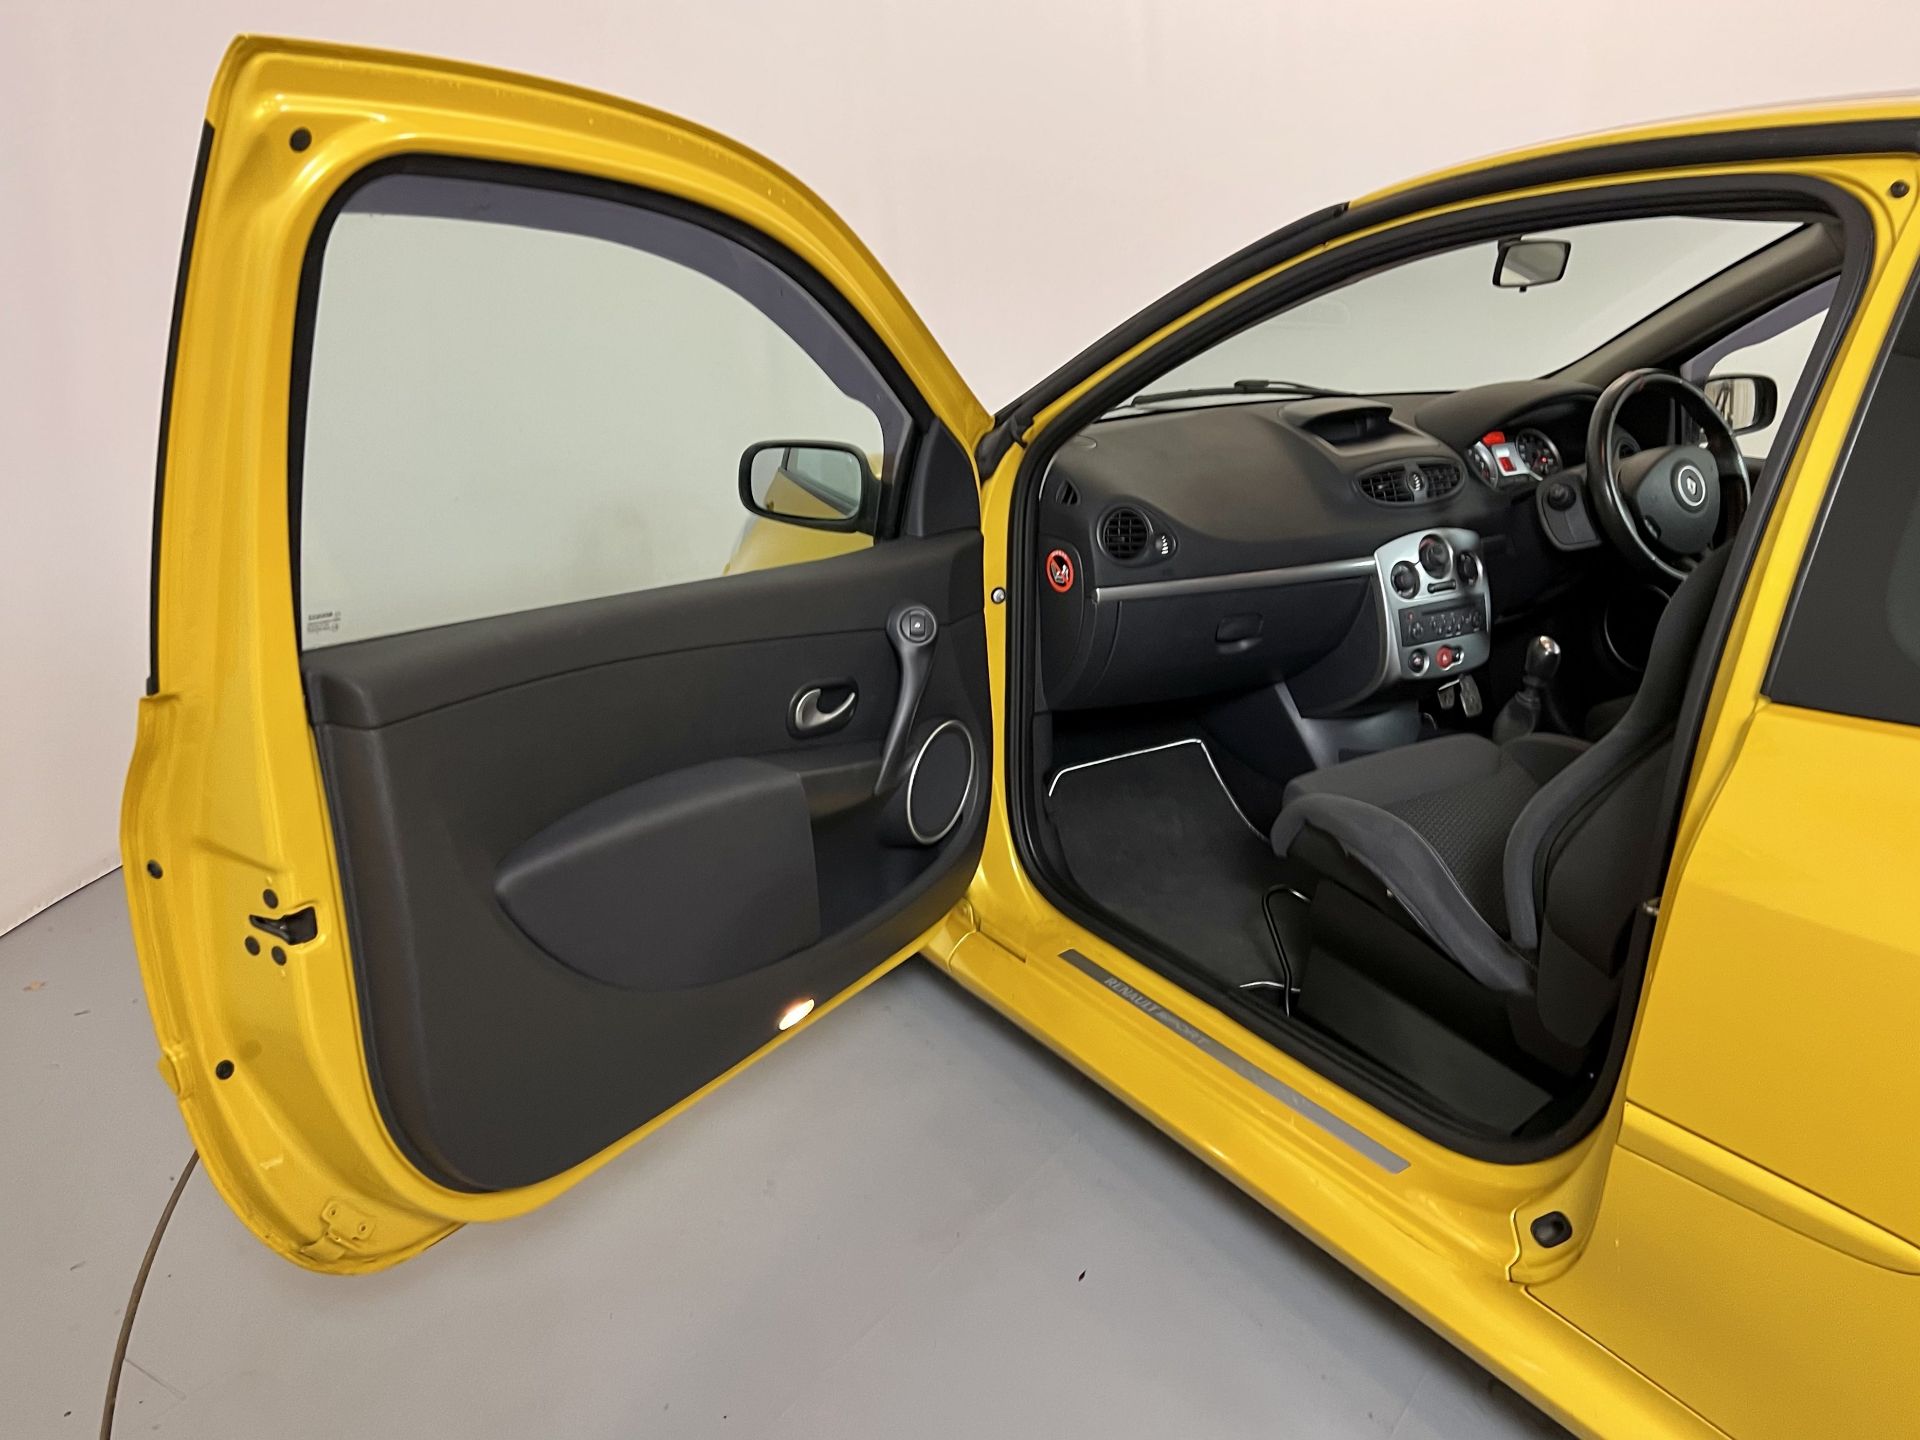 Renault Clio 197 F1 - Image 22 of 30